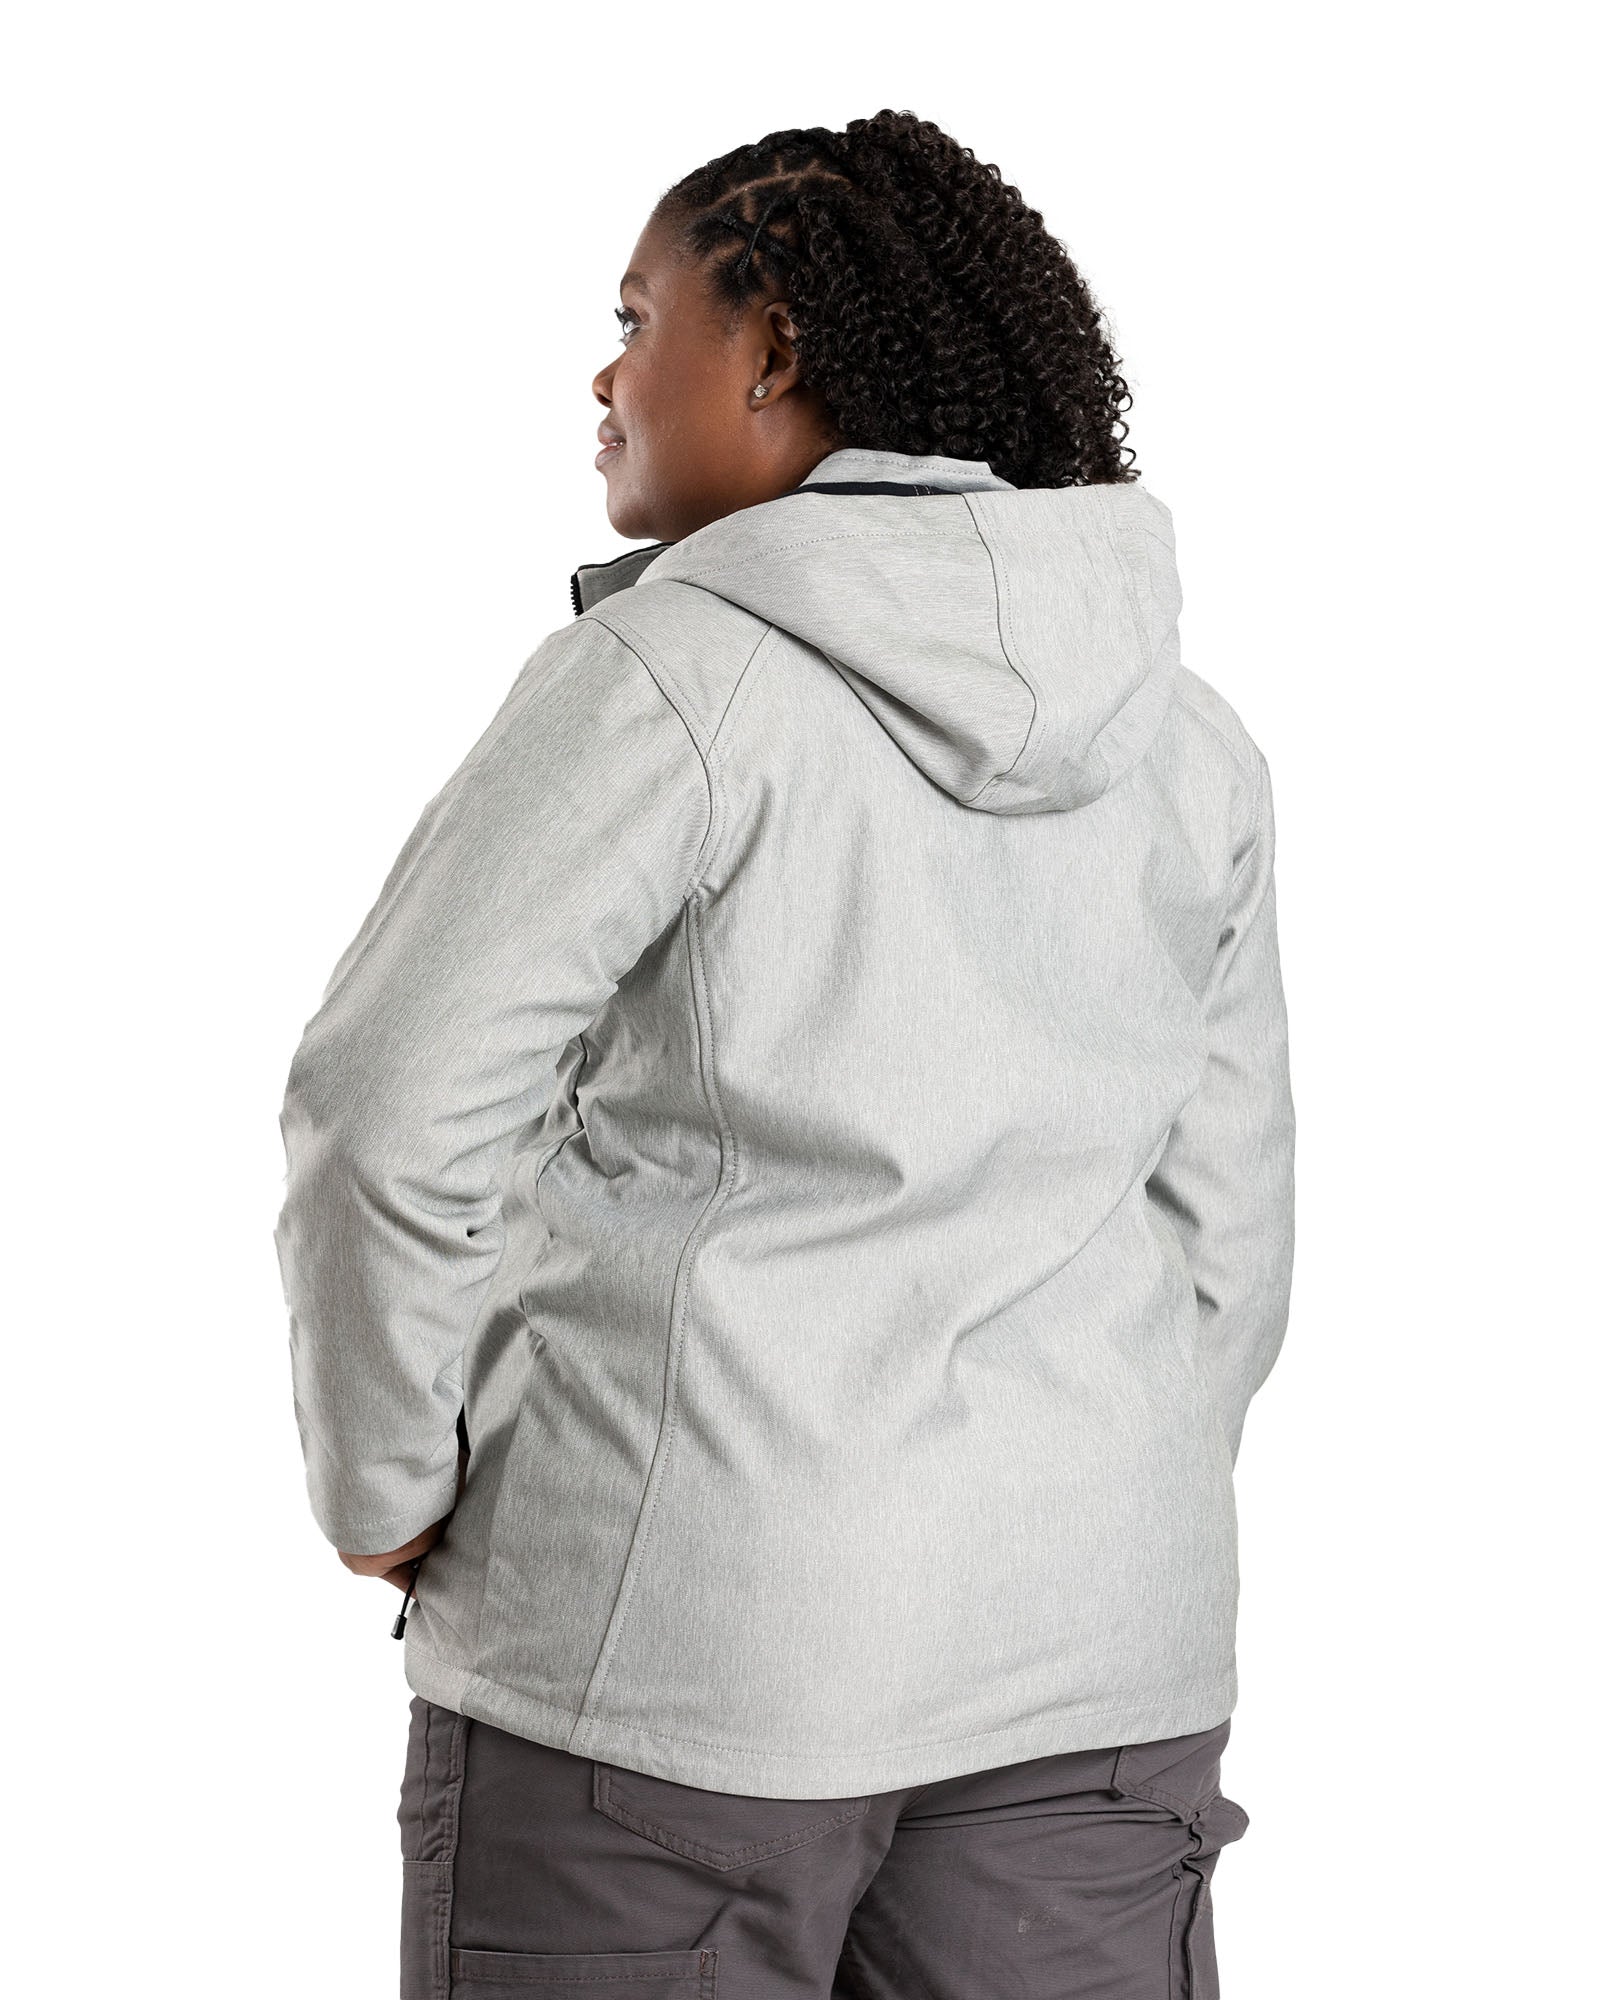 WJS301GY Women's Hooded Softshell Jacket